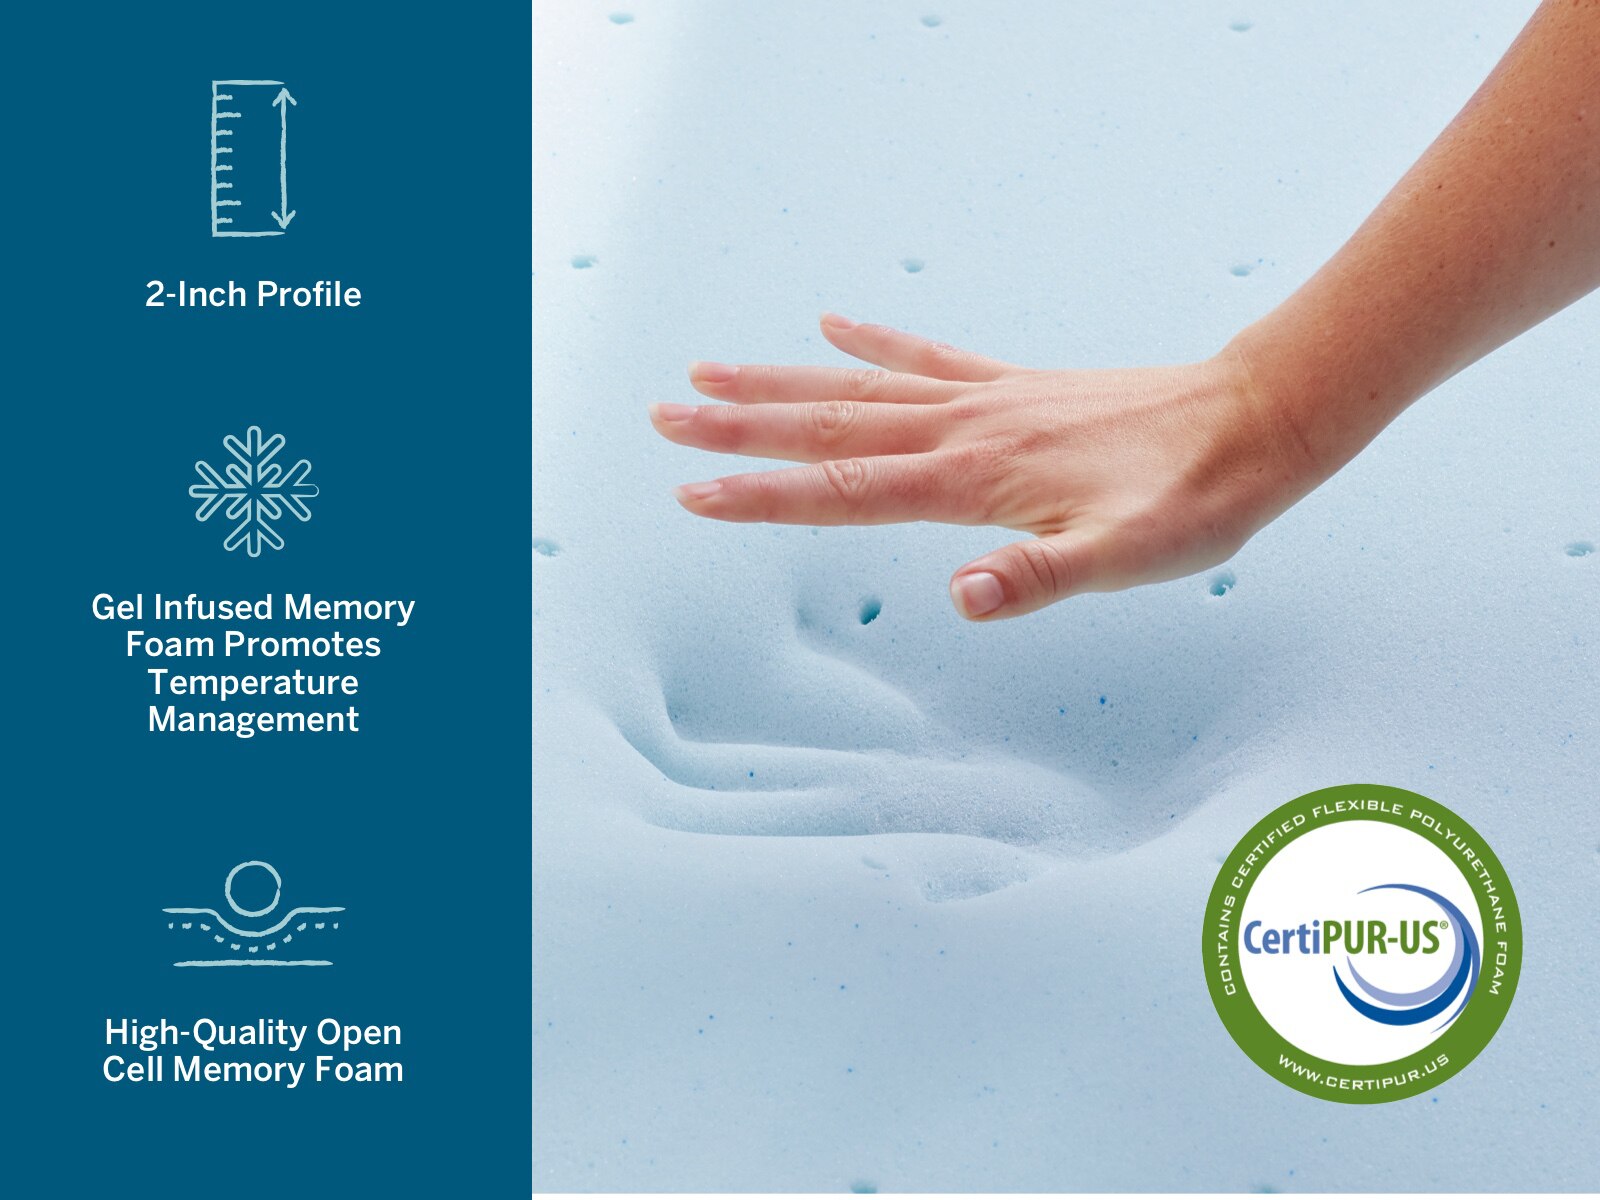 lucid 2 gel memory foam mattress topper review